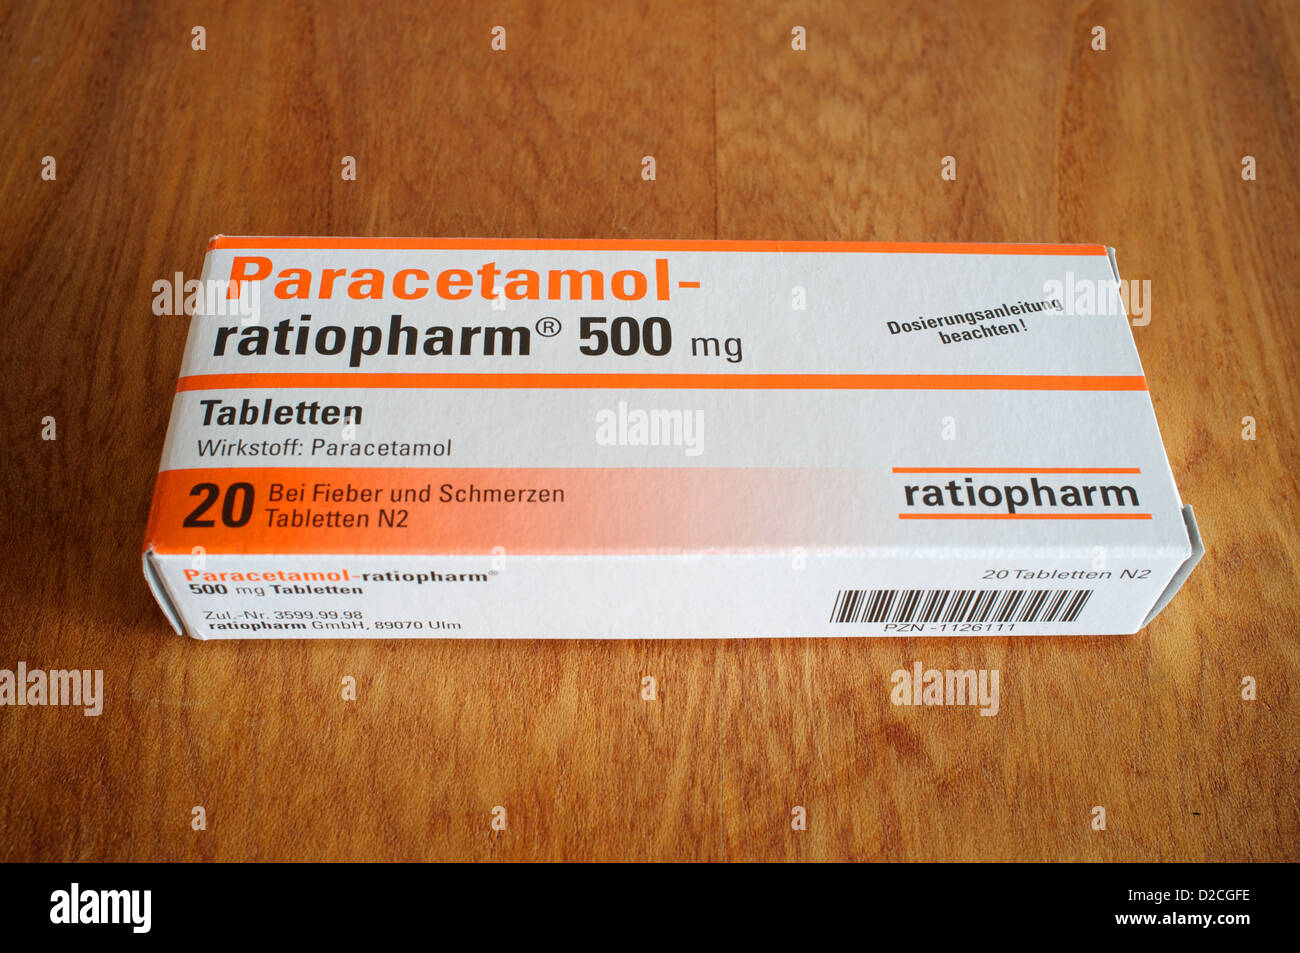 Paracetamol ratiopharm Stock Photo - Alamy